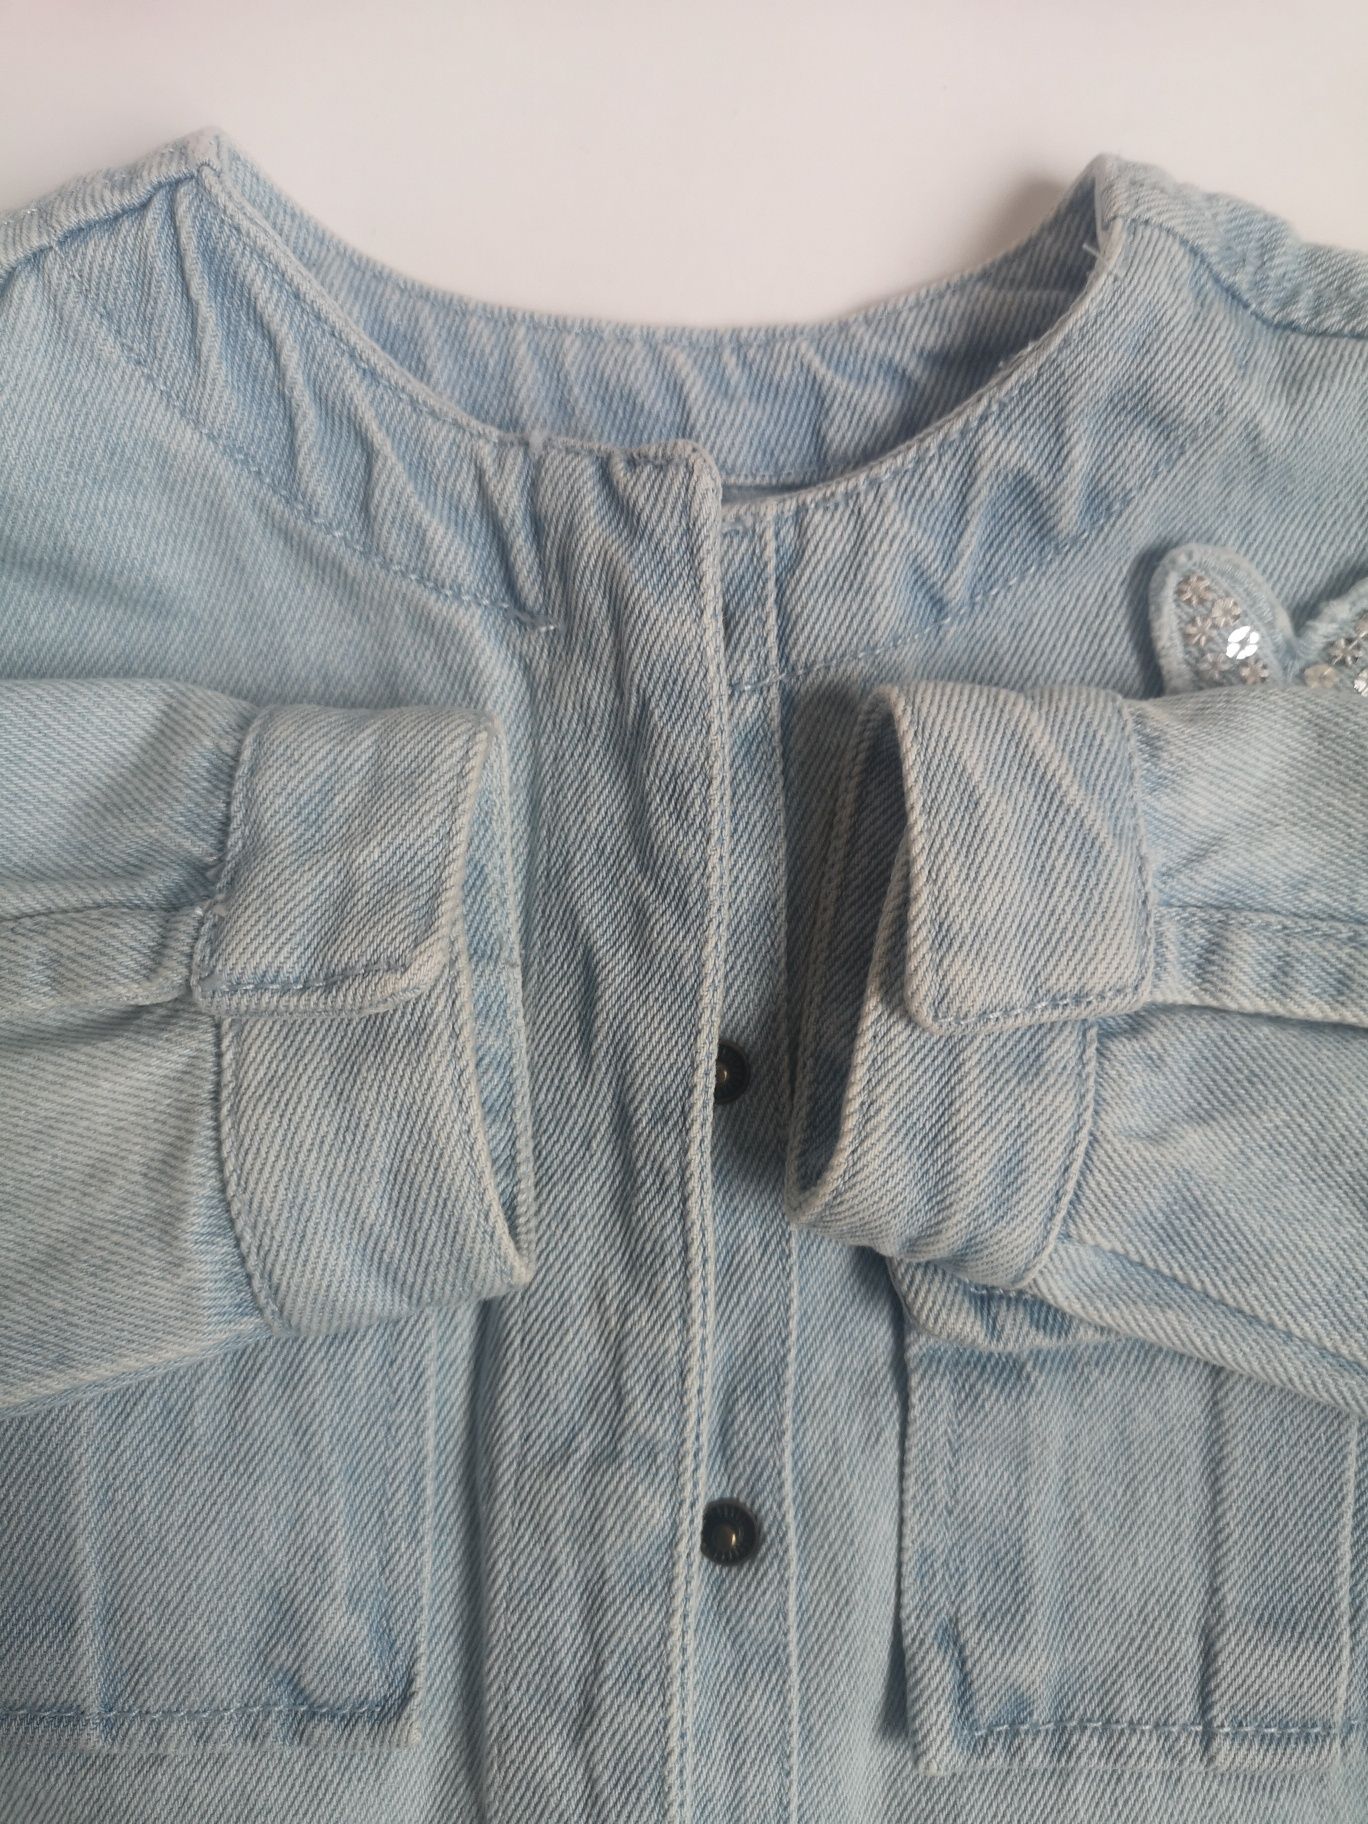 Zara jeansowa kurteczka katana, błękitna, 98, 2-3 lata.